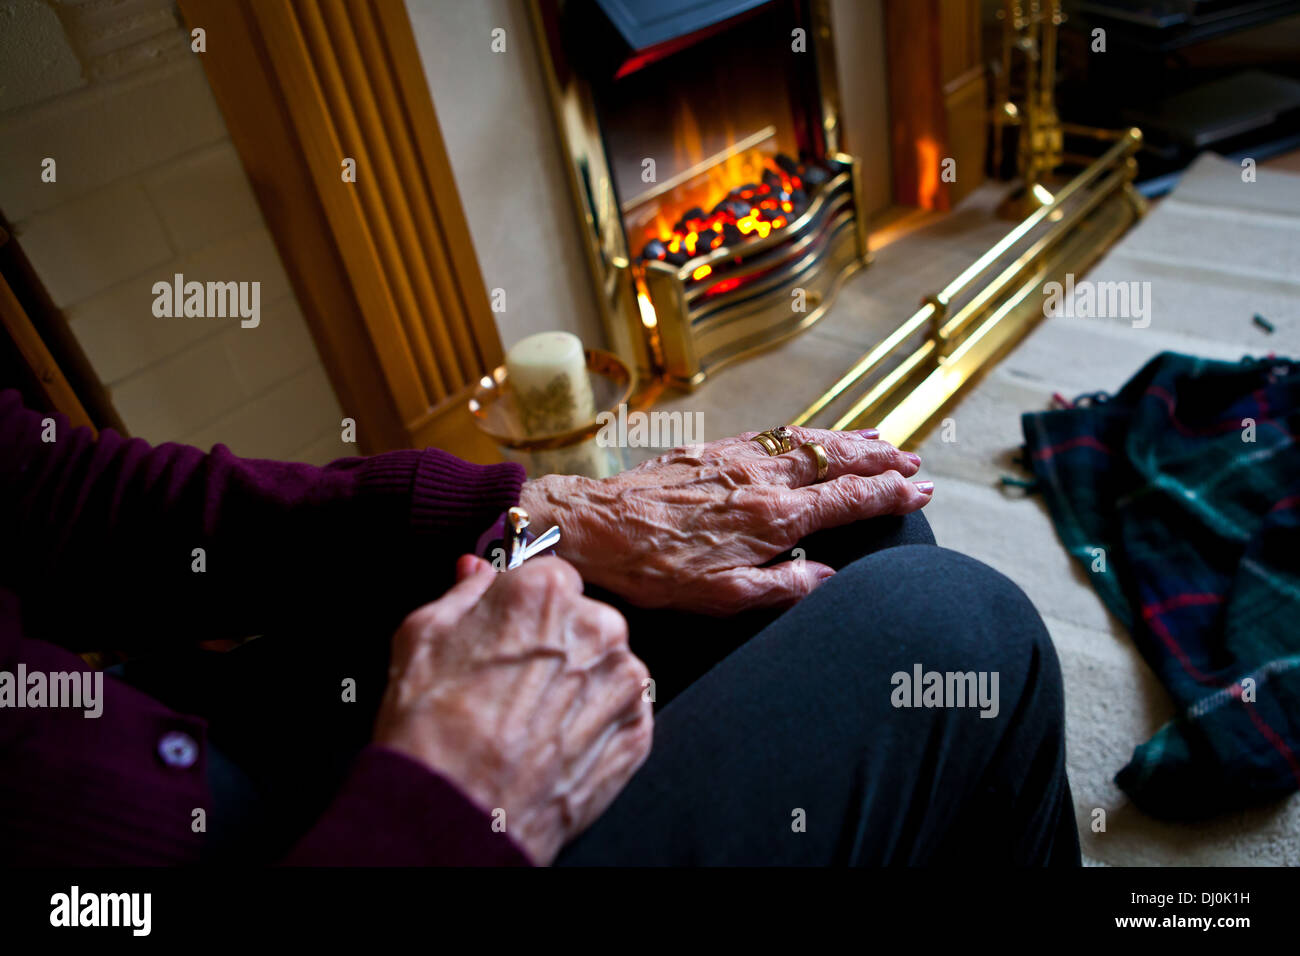 Elderly woman sitting near electric fire Stock Photo